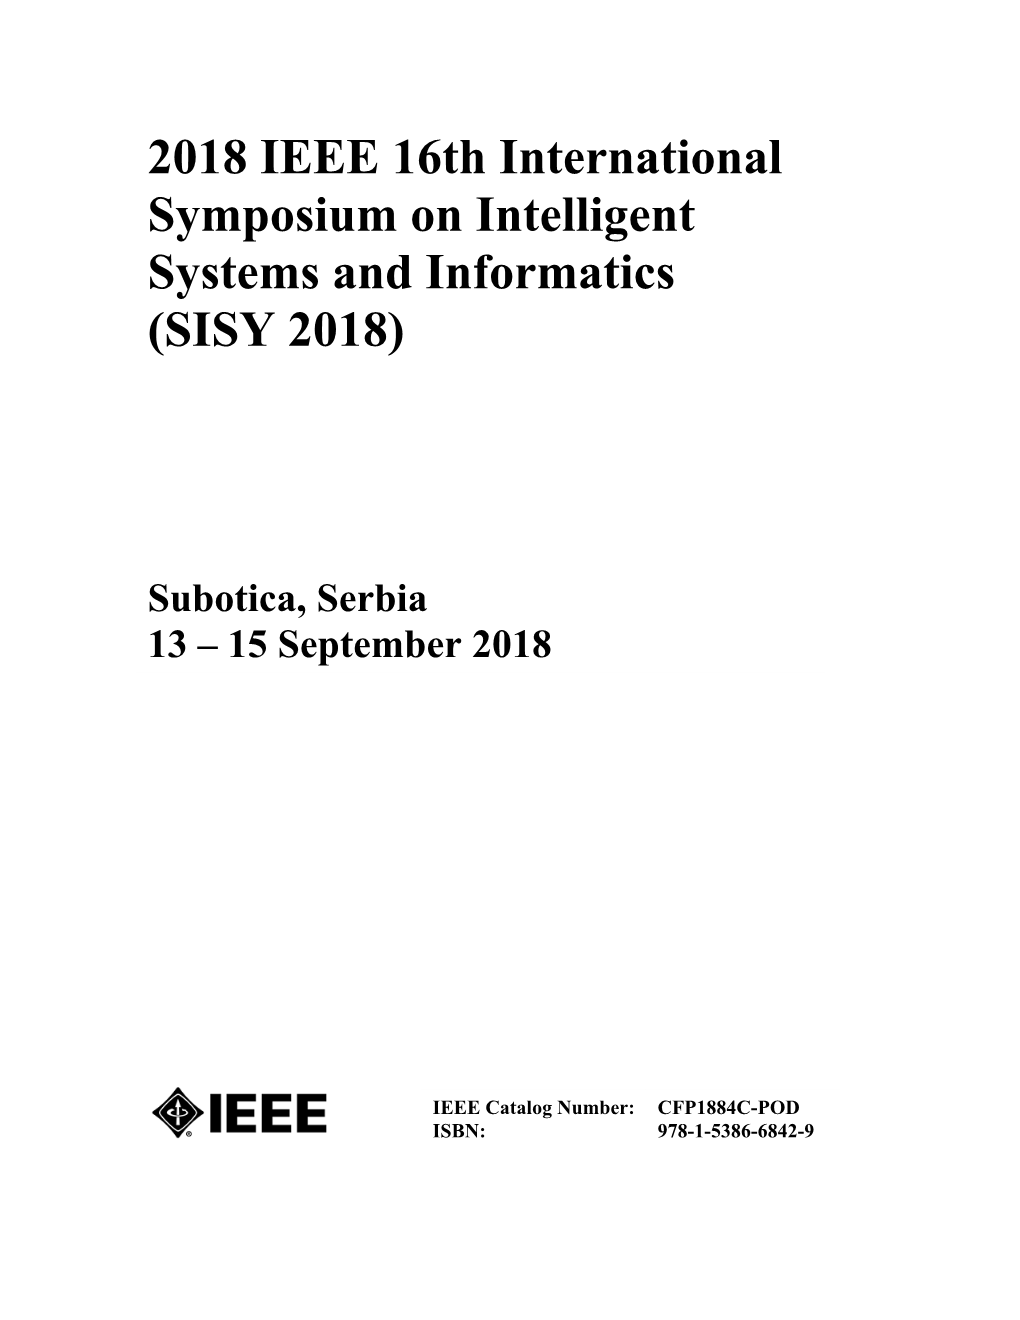 2018 IEEE 16Th International Symposium on Intelligent Systems and Informatics